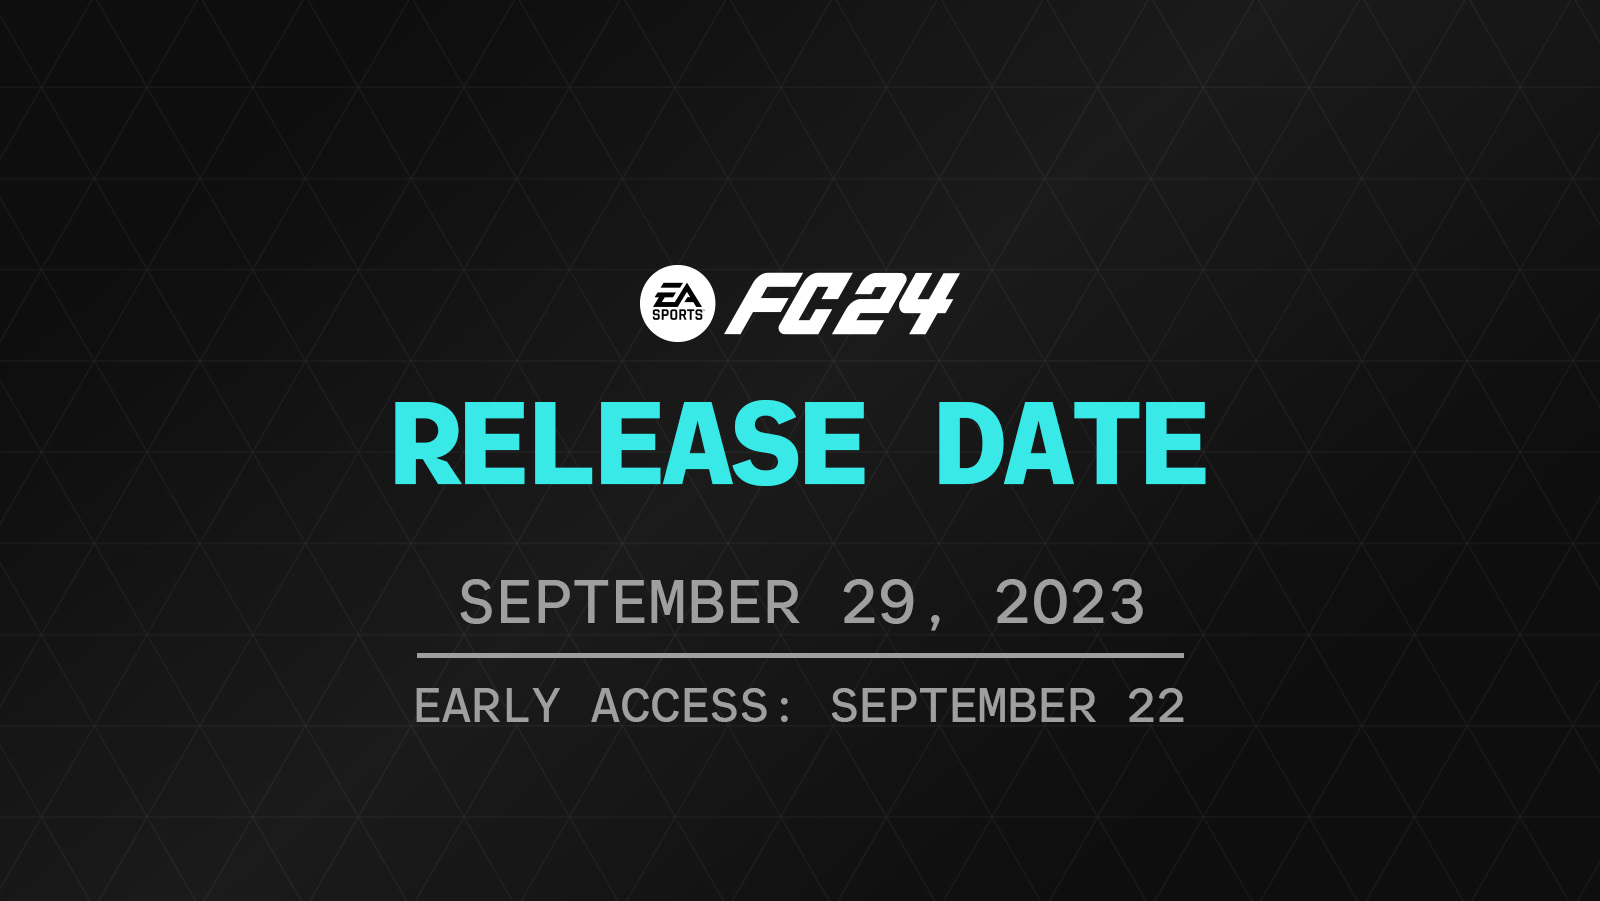 EA FC 24 Web App and Companion App release date